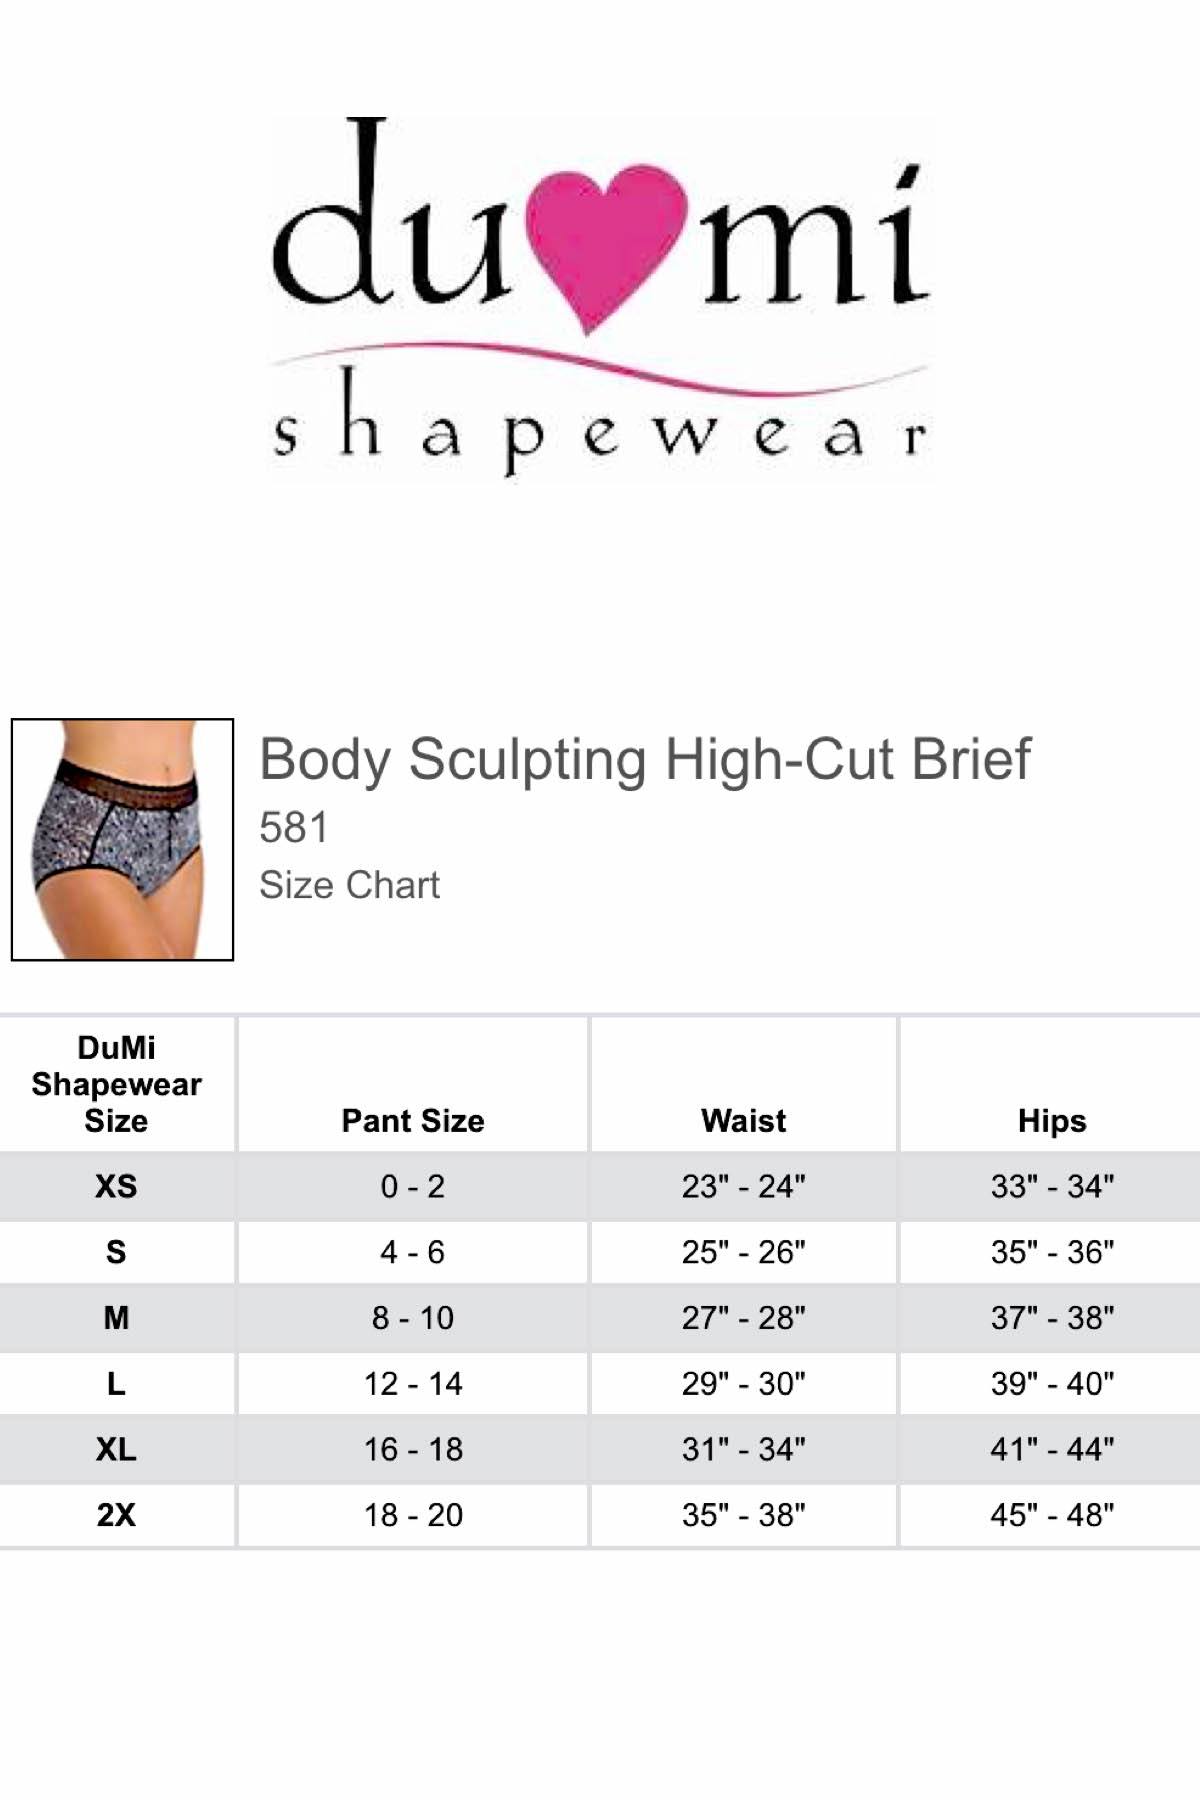 DuMi Shapewear Lace-Print Body-Sculpting High-Cut Brief